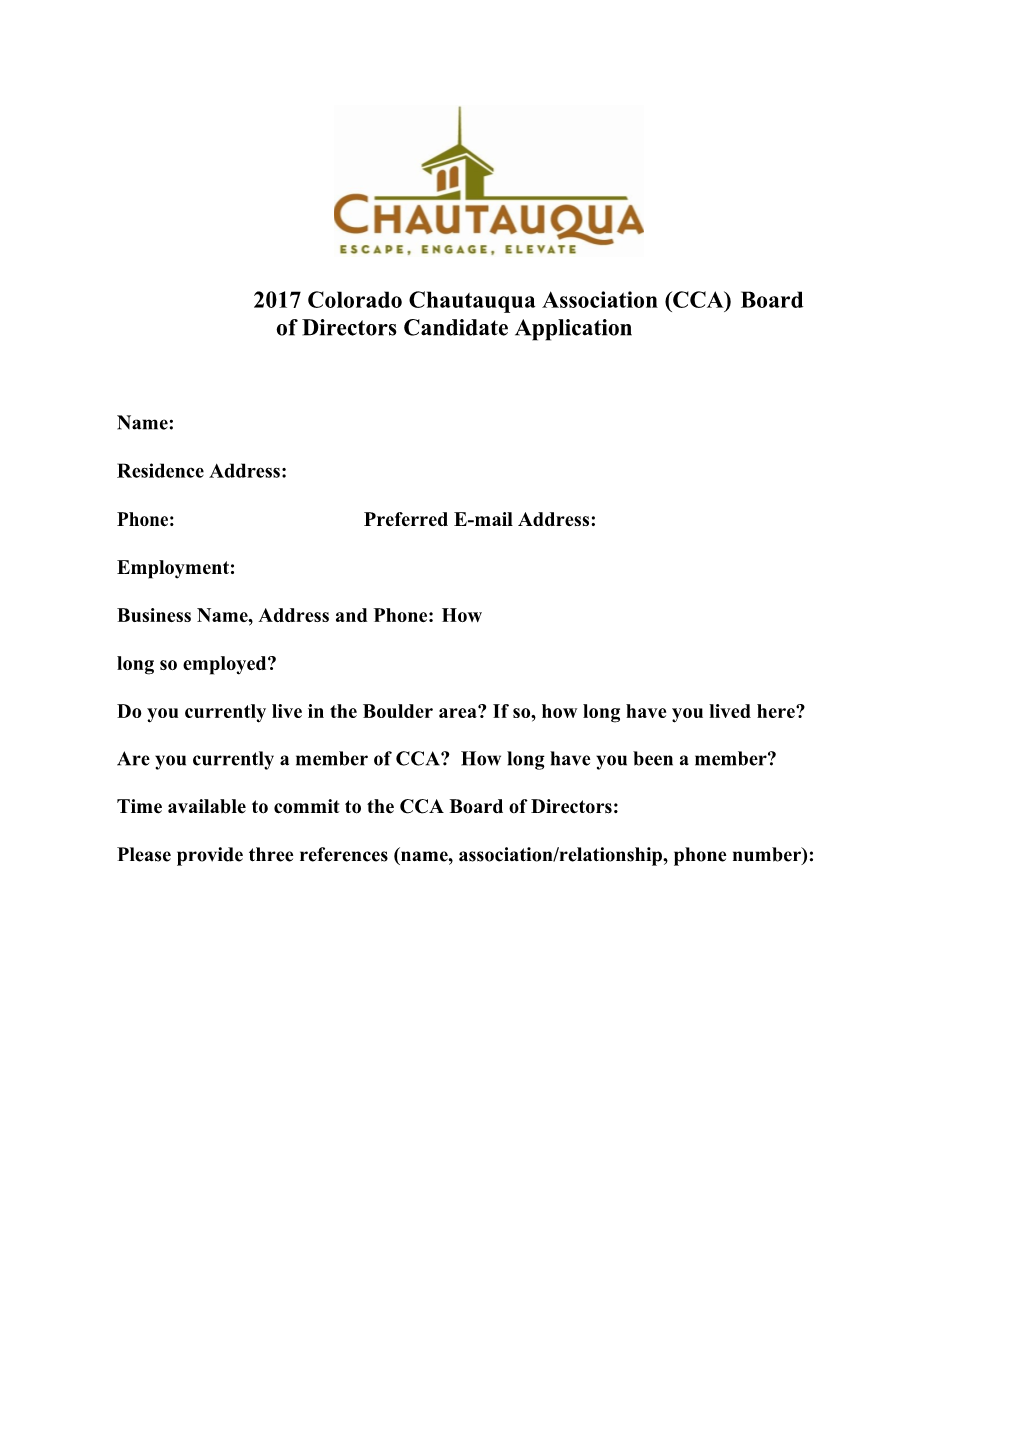 2017 Colorado Chautauqua Association (CCA) Board of Directors Candidate Application